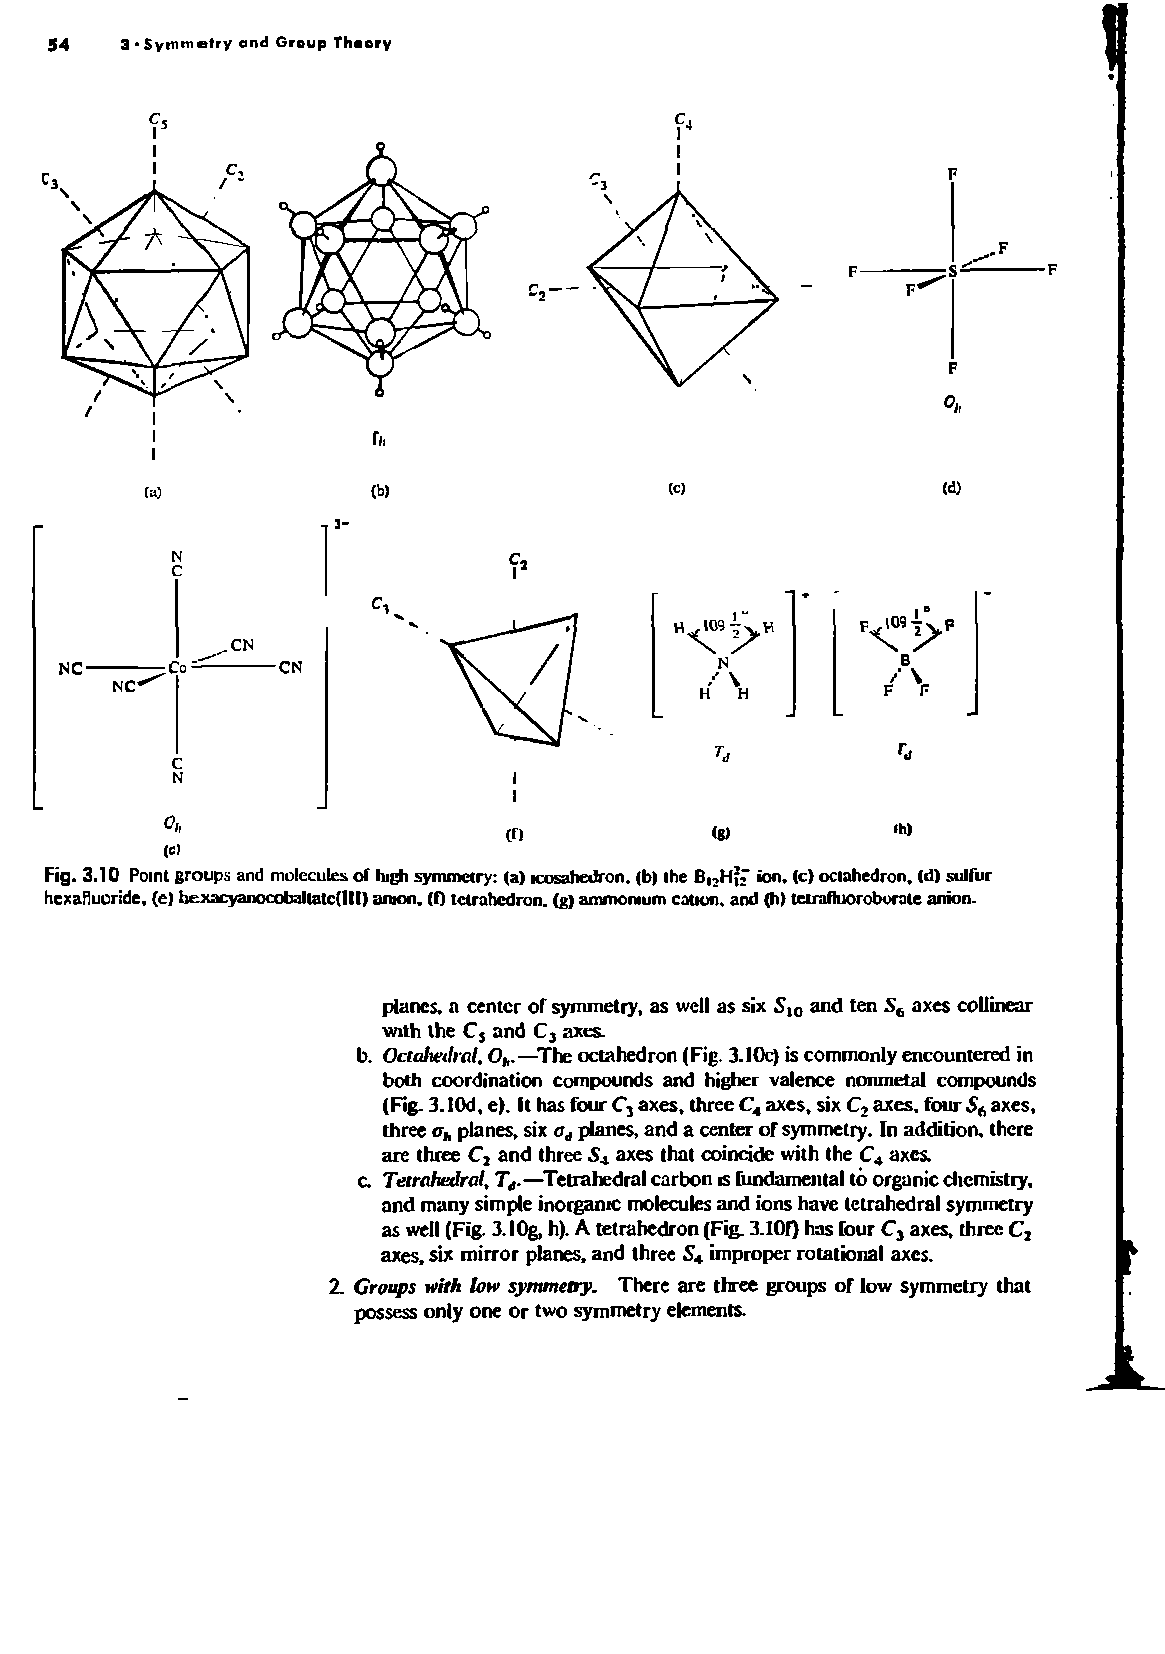 Fig. 3.10 Point groups and molecules of high symmetry (a) icosahedron, (b) the BijHi ion. (c) octahedron, (d) sulfur hexaflucride, (e) bexacyanocoballatc(lll) amon. (f) tetrahedron, (g) ammonium cation, and (h> teirafhioroborate anion.